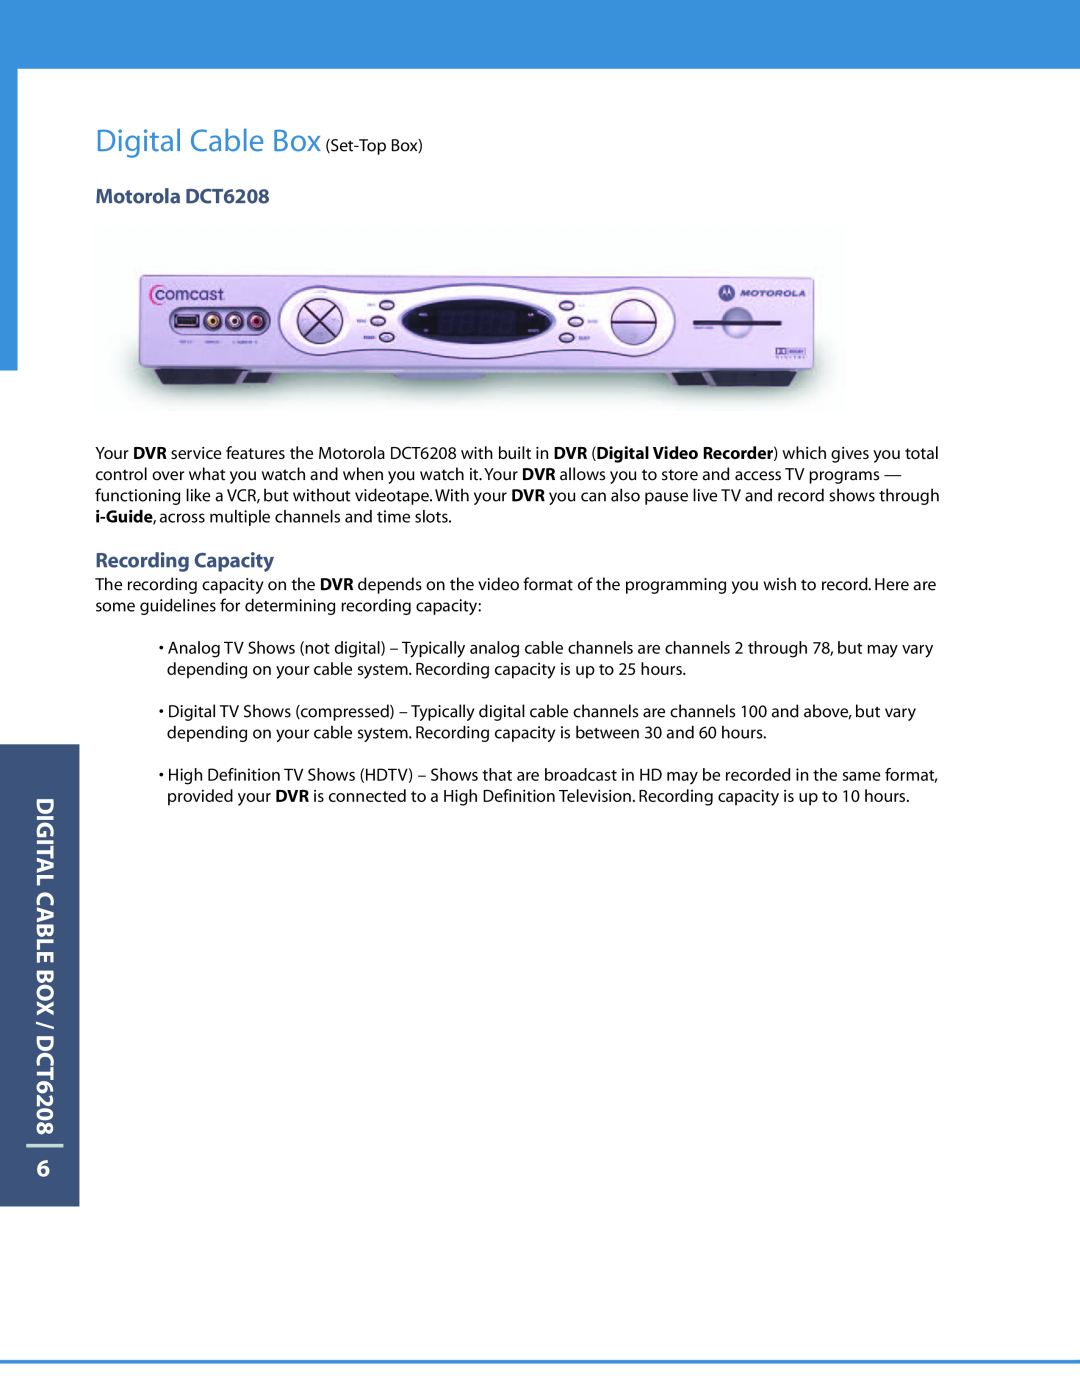 Motorola manual DIGITAL CABLE BOX / DCT6208, Motorola DCT6208, Recording Capacity, Digital Cable Box Set-TopBox 